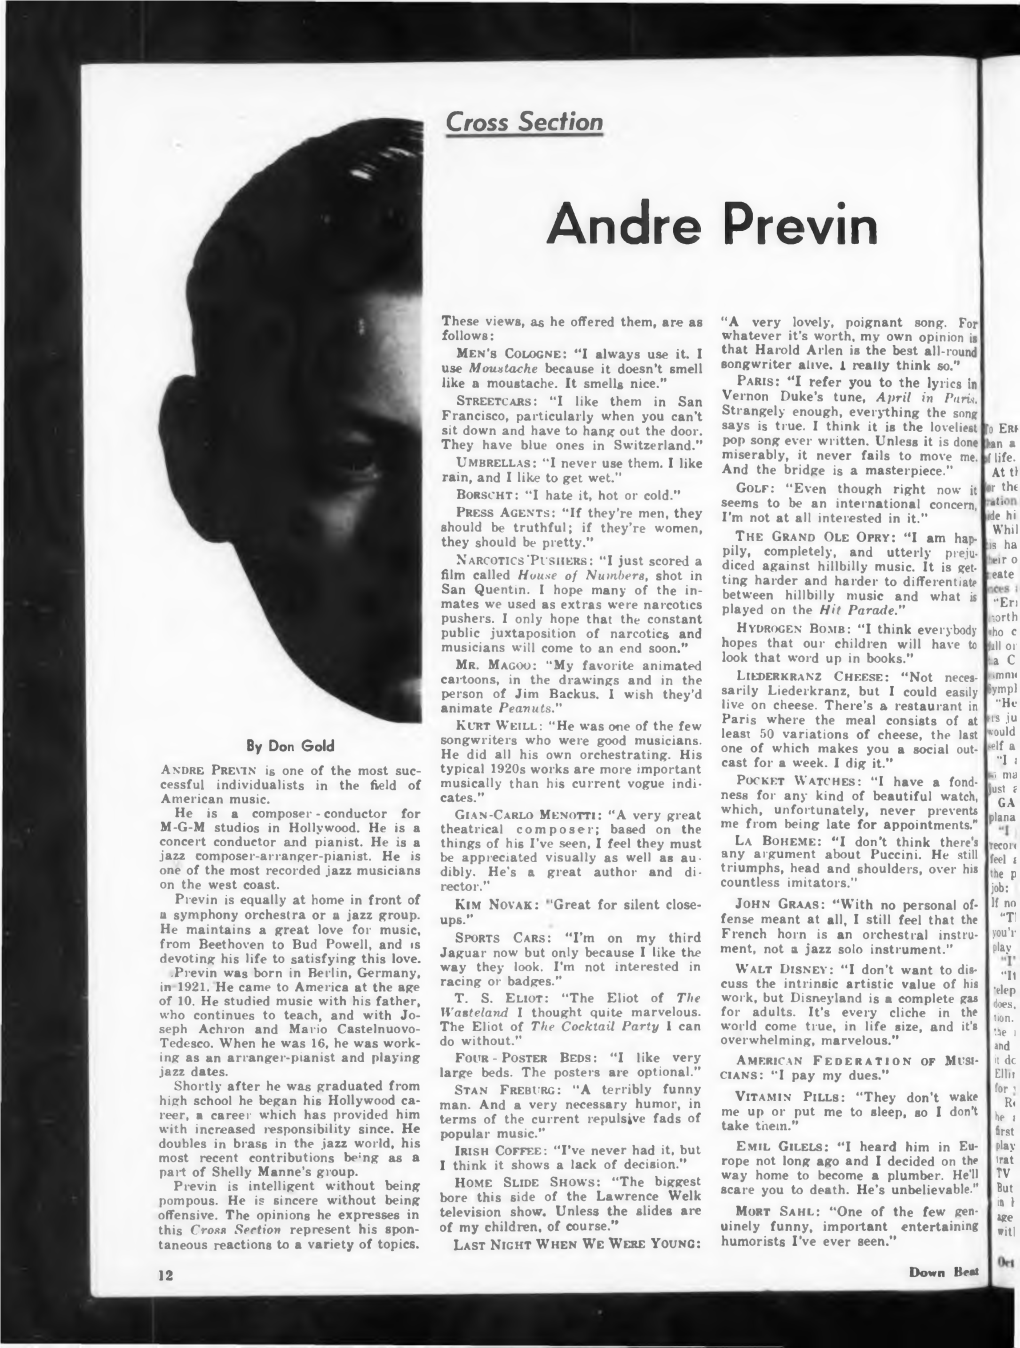 Andre Previn